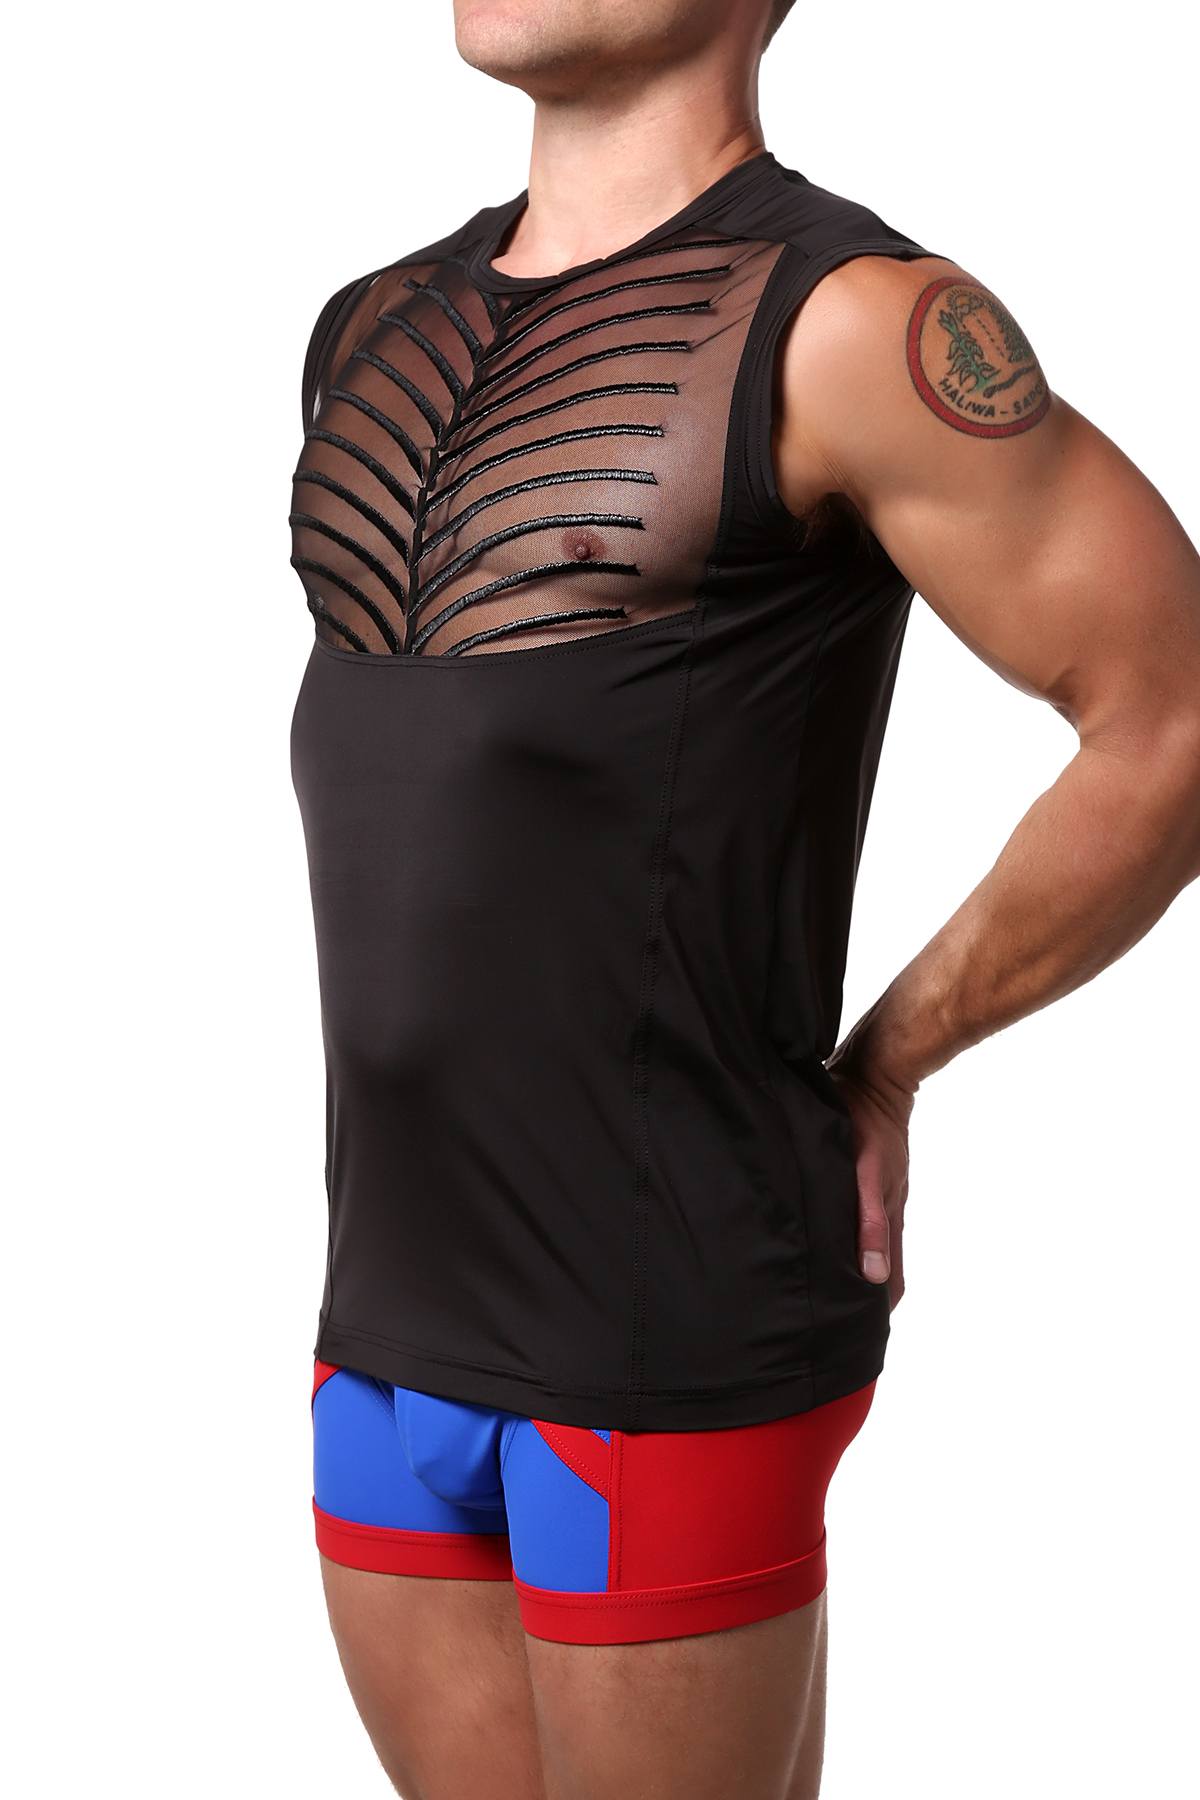 Gregg Homme Black Soiree Microfiber Mesh Muscle Shirt